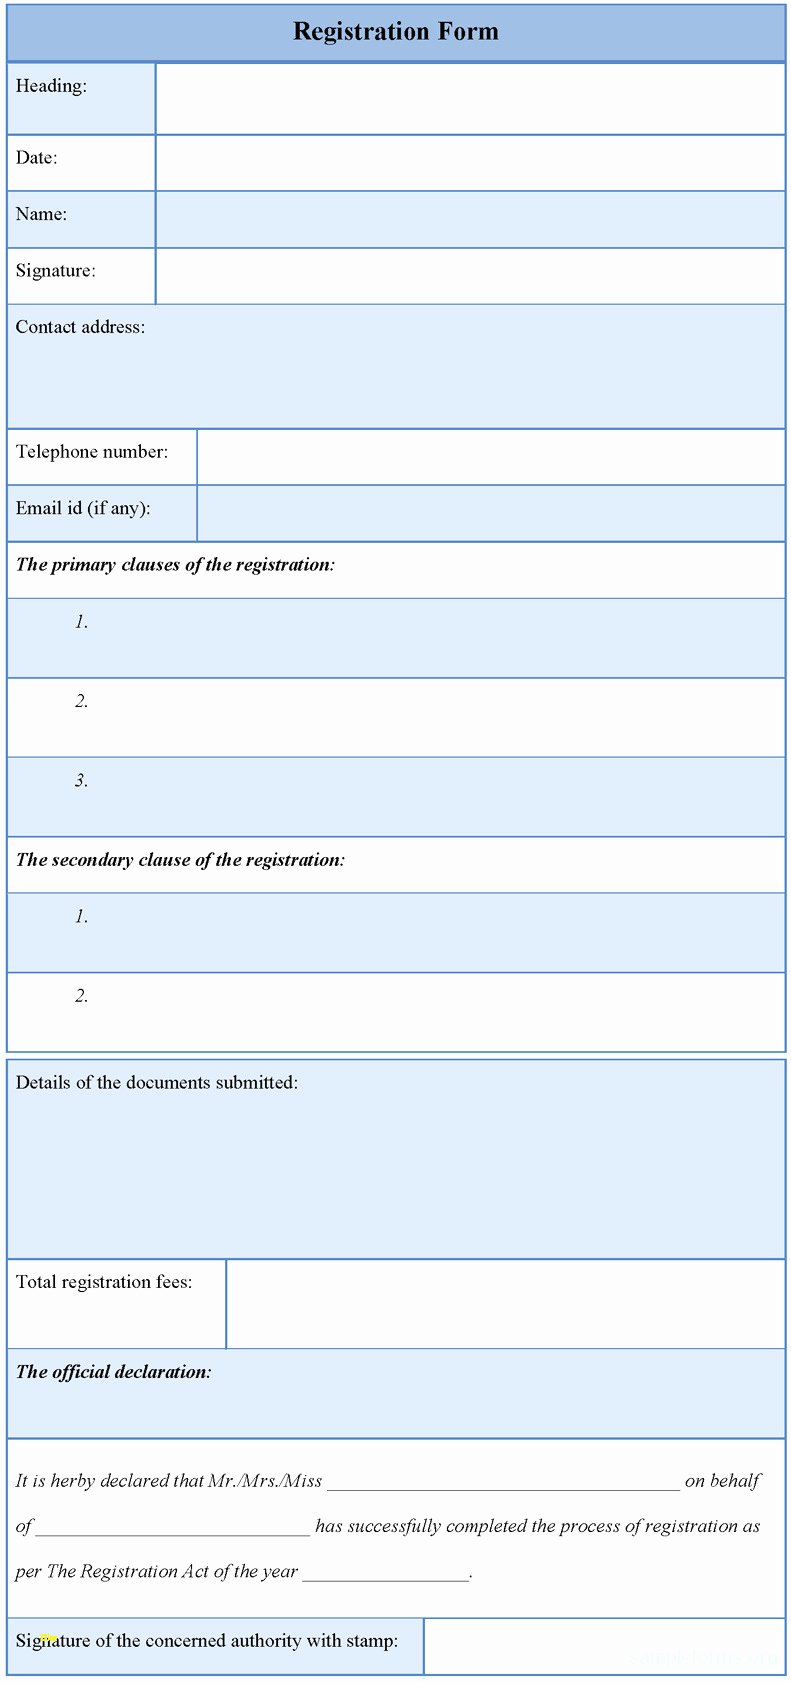 Html Registration form Template Luxury Registration form In HTML Template Image Collections